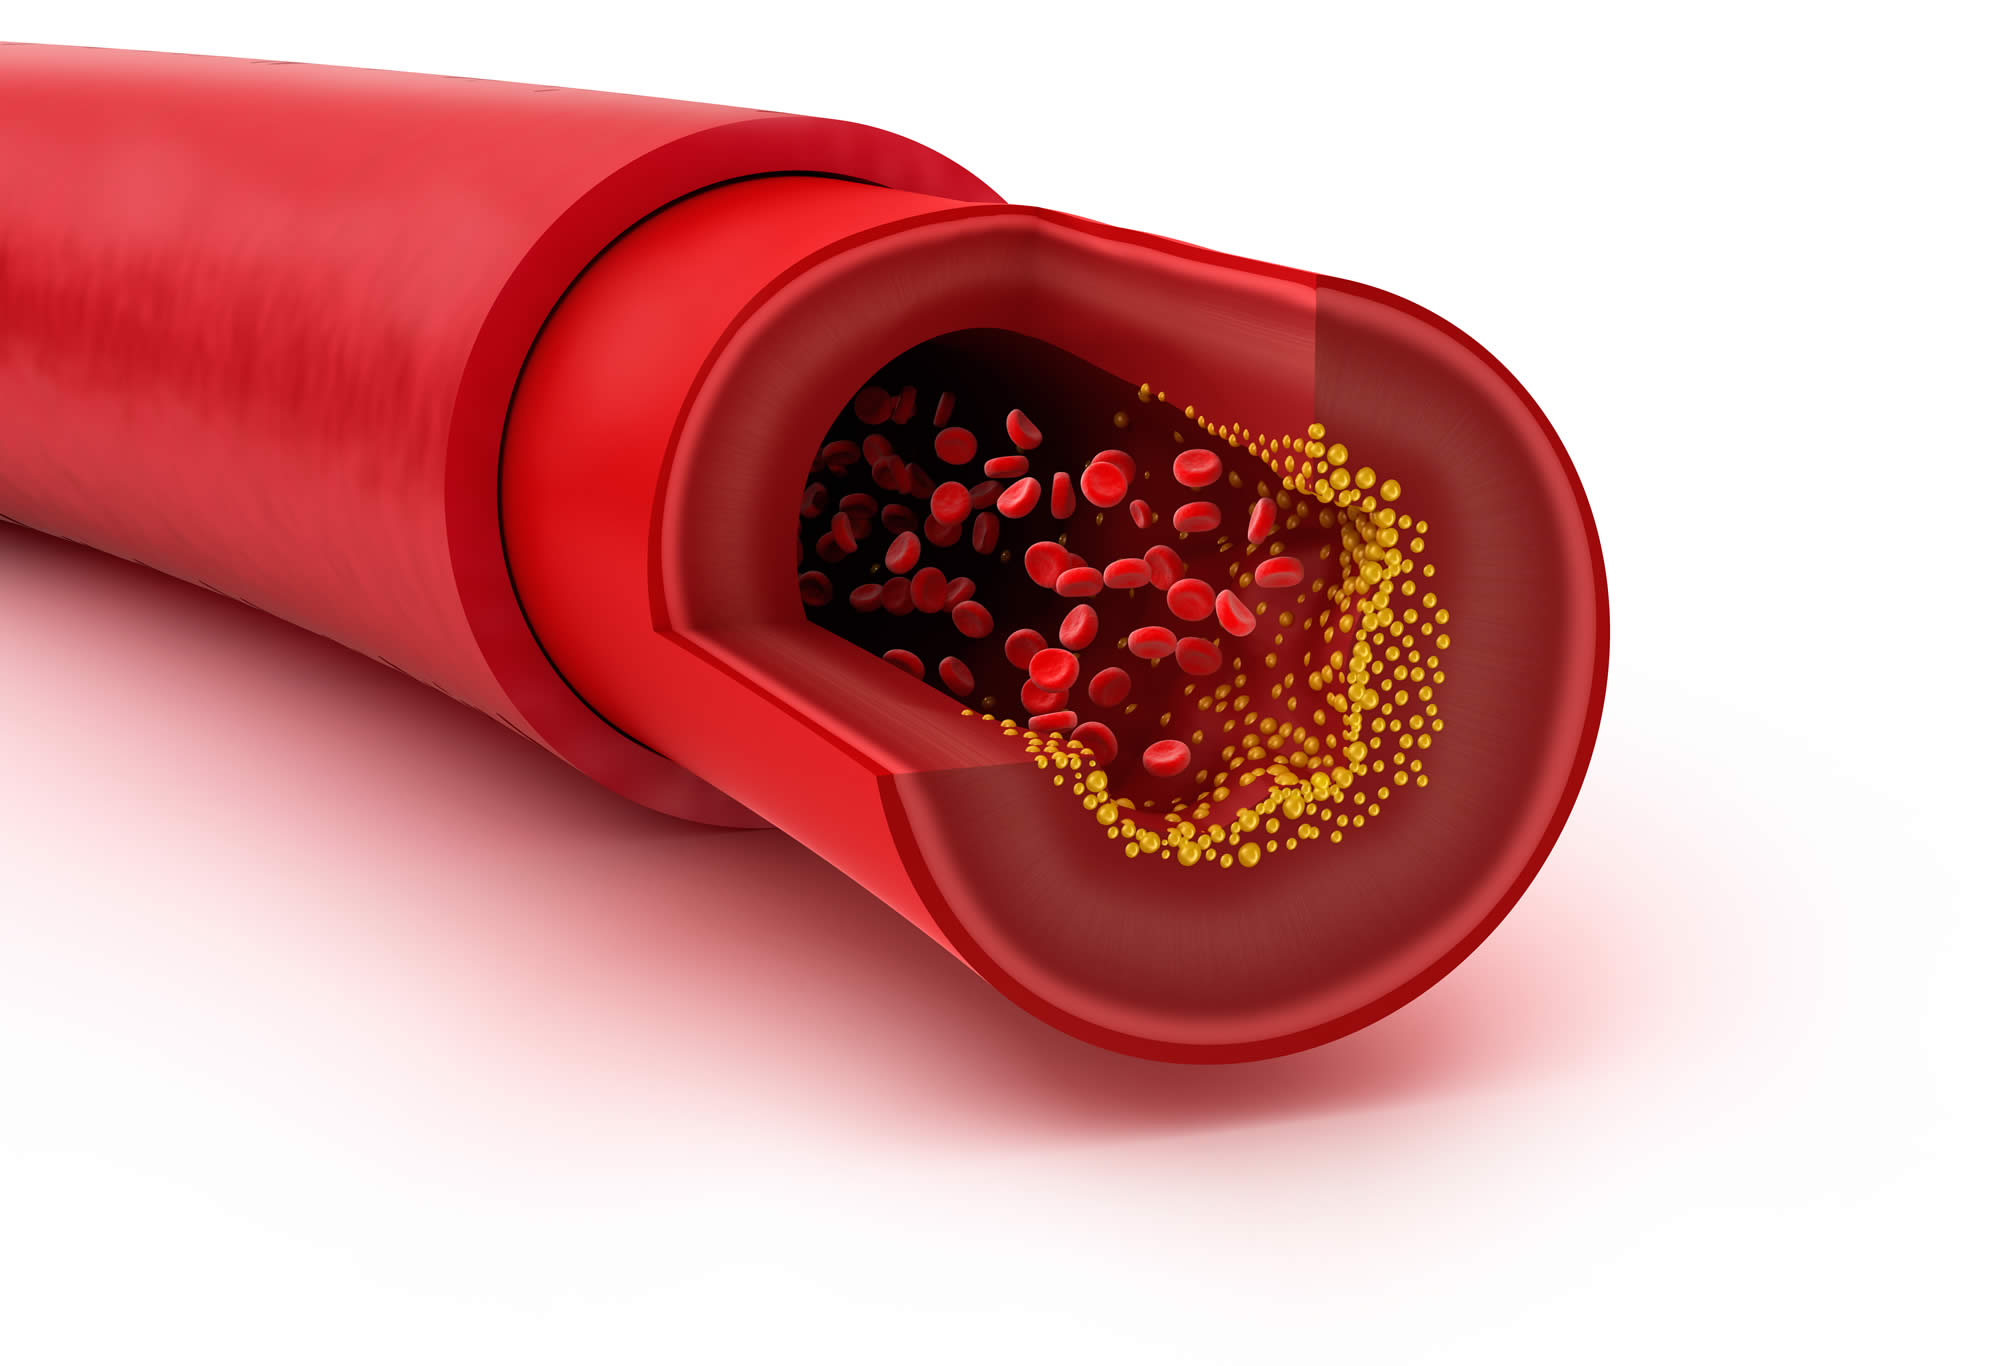 Recent Updates on Cholesterol Treatment